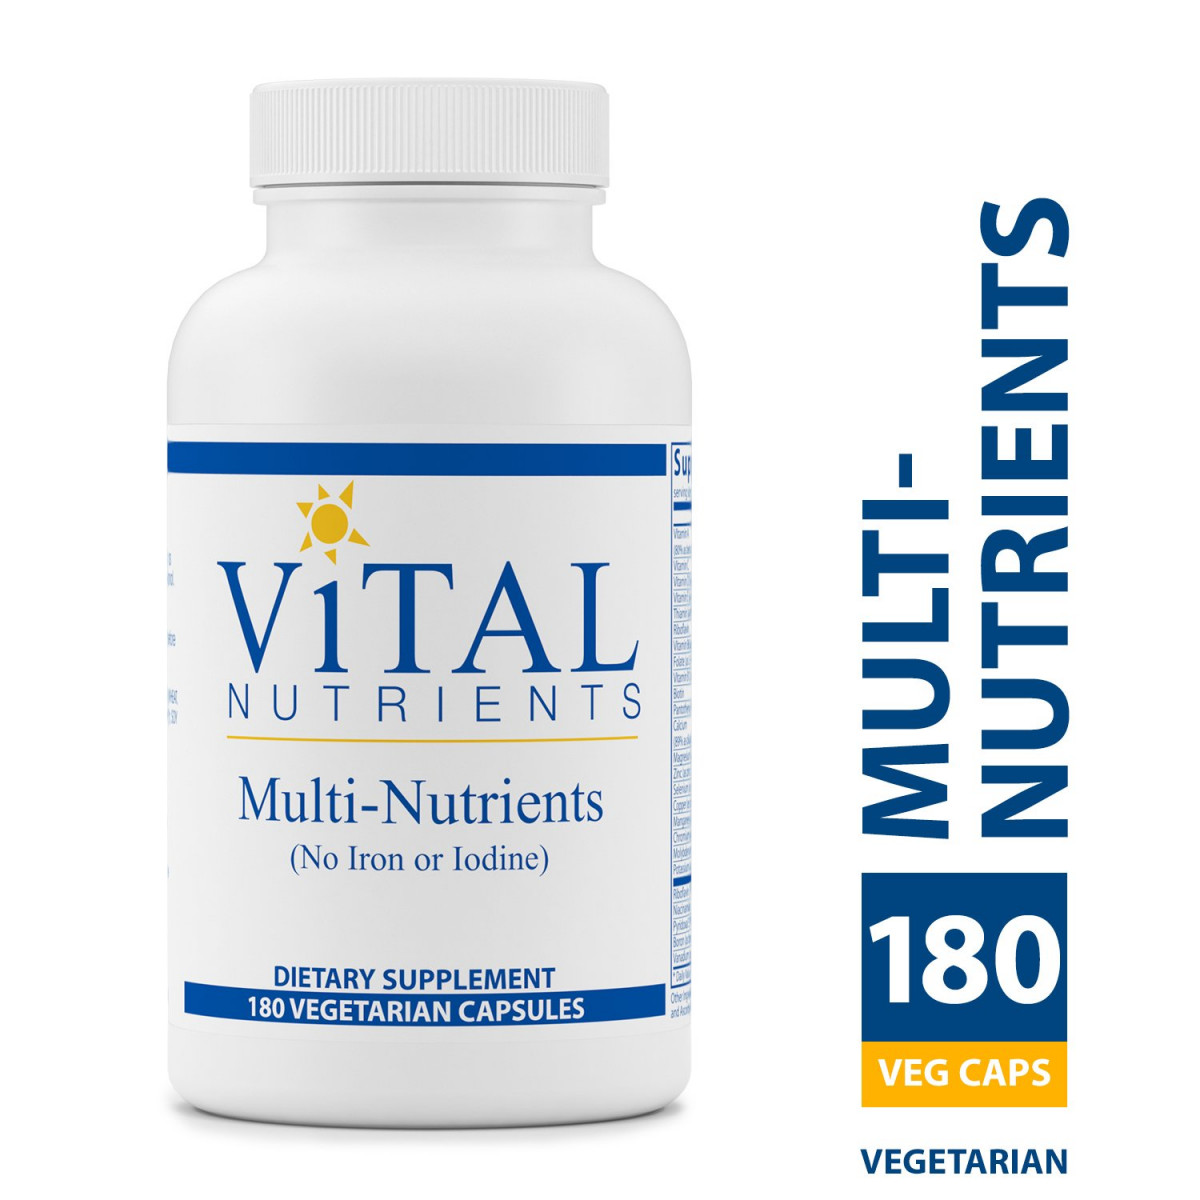 Vital Nutrients - Multi-Nutrients (No Iron or Iodine)